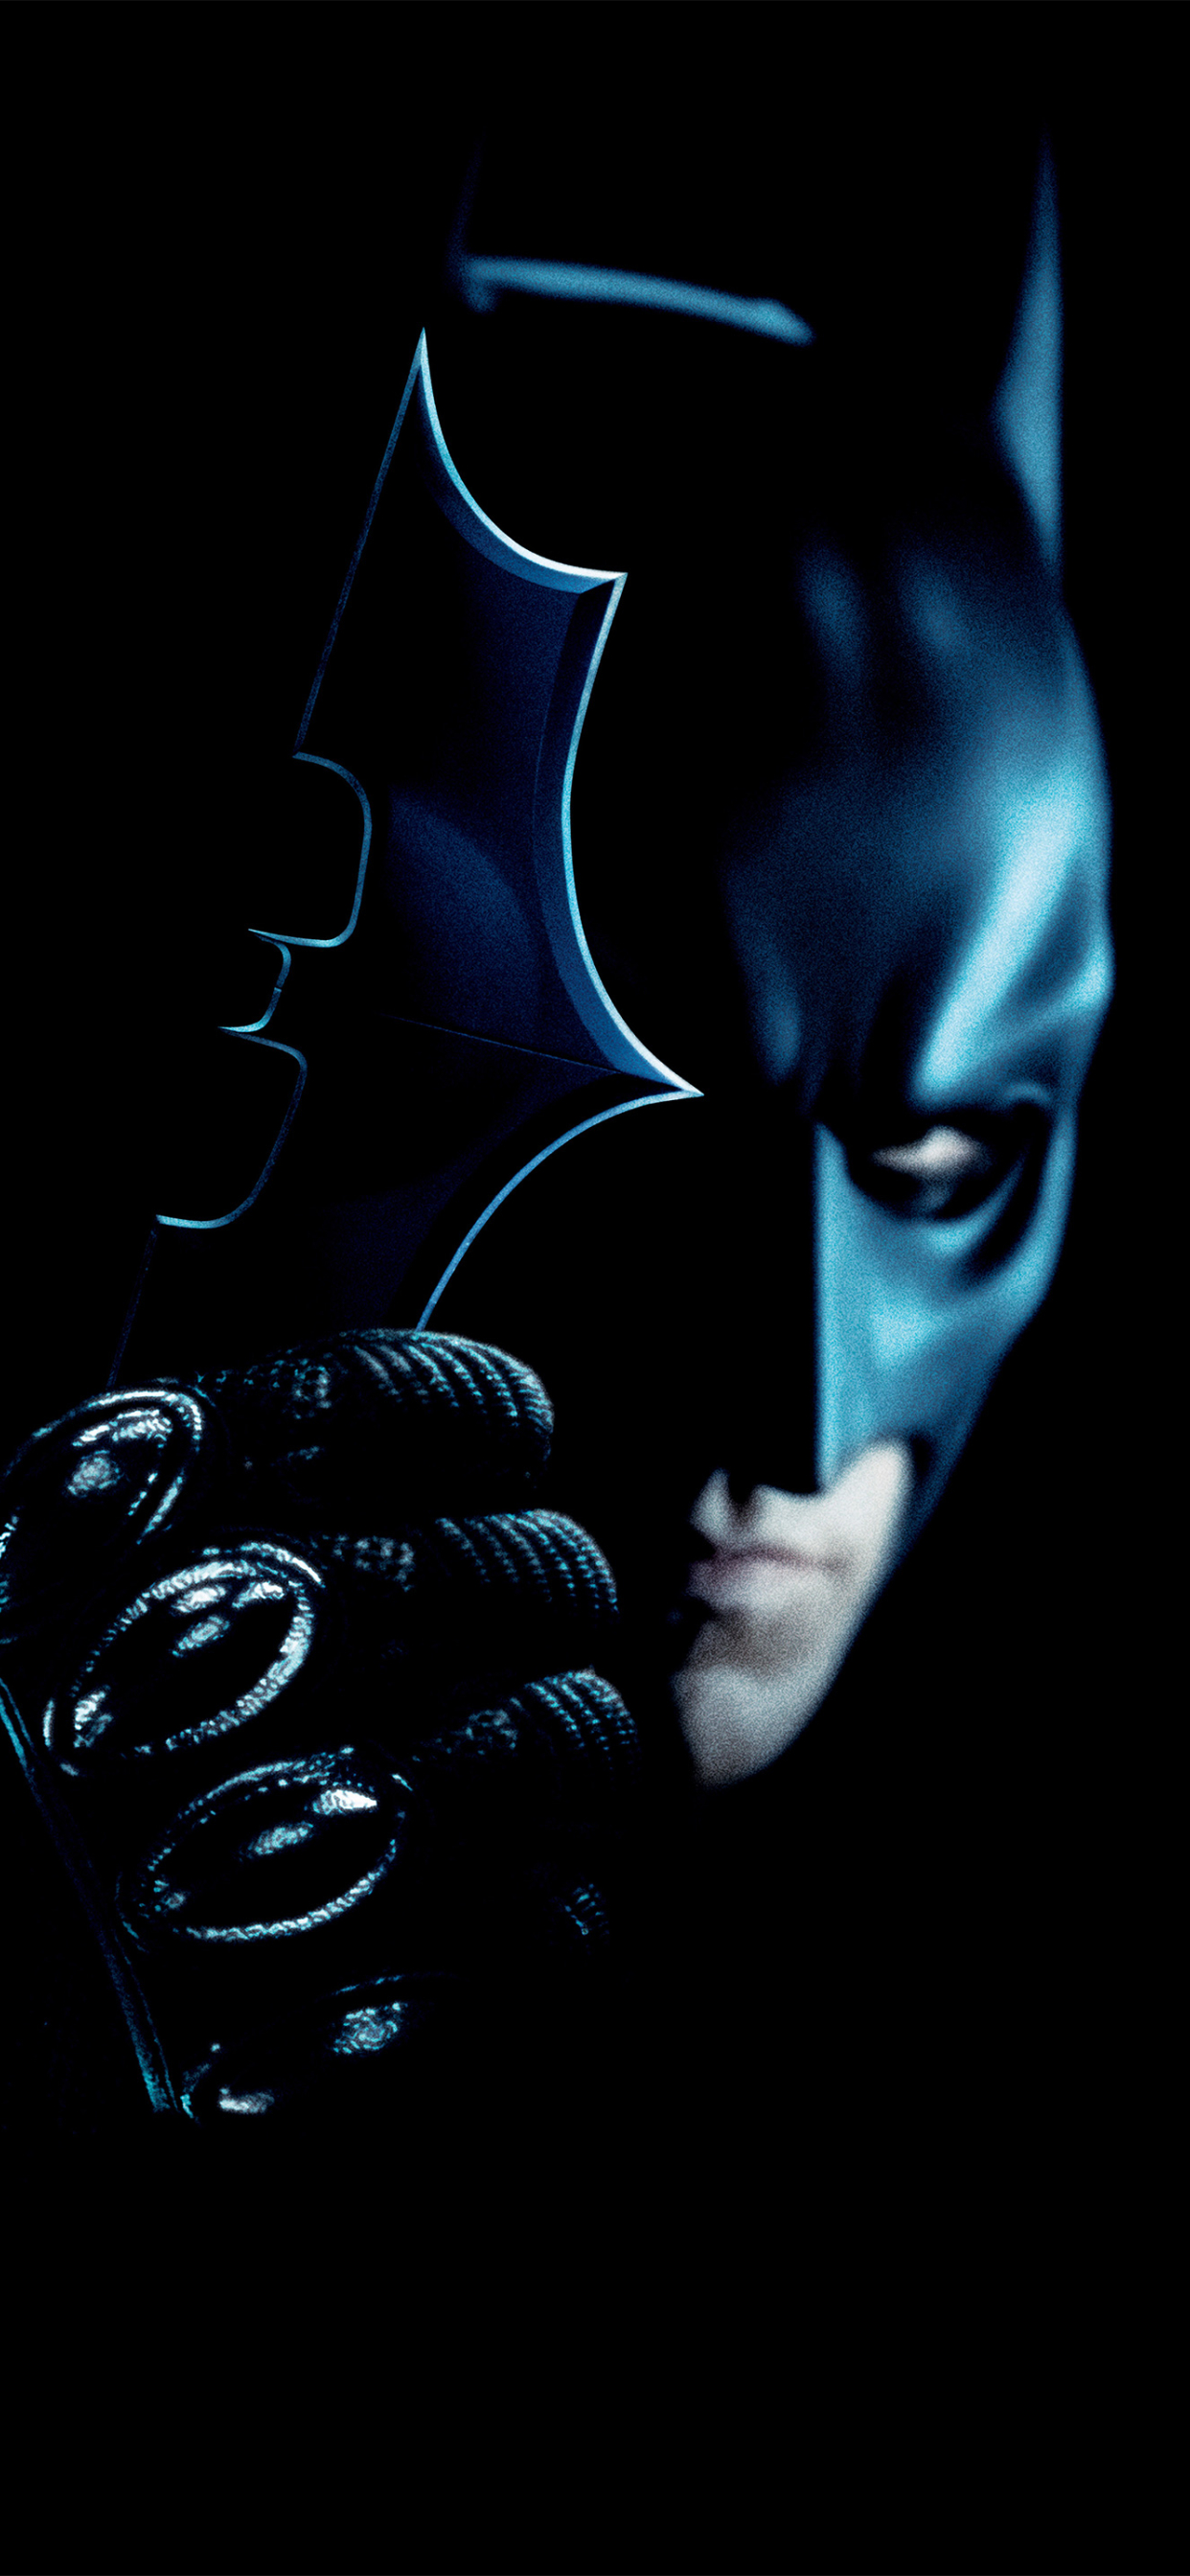 Batman DK - The Dark Knight Wallpaper (8602207) - Fanpop